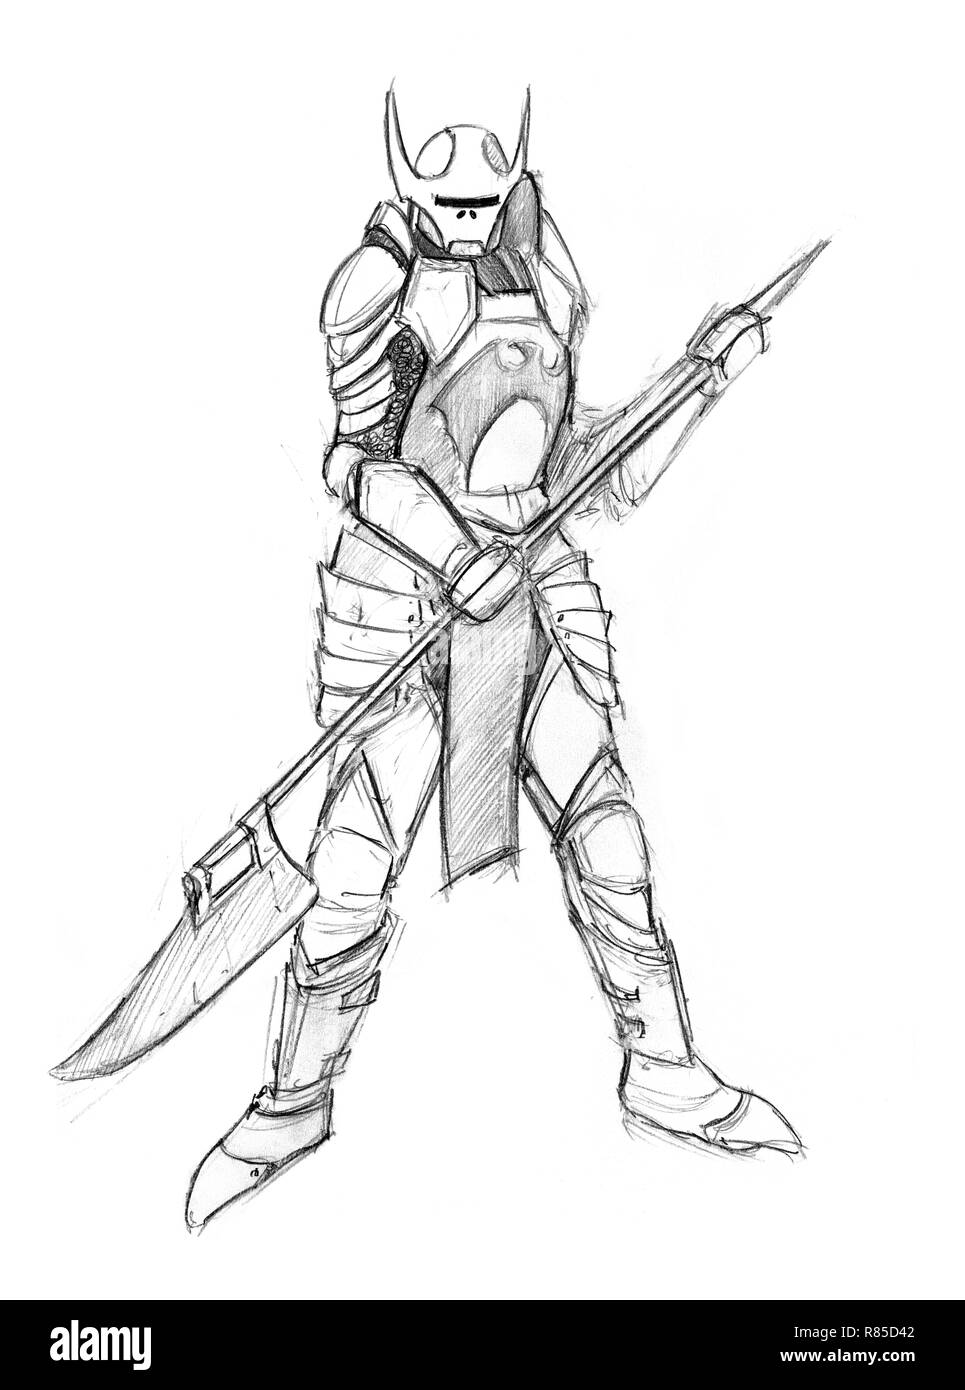 Black Grunge Rough Pencil Sketch of Evil Warrior Knight Stock Photo